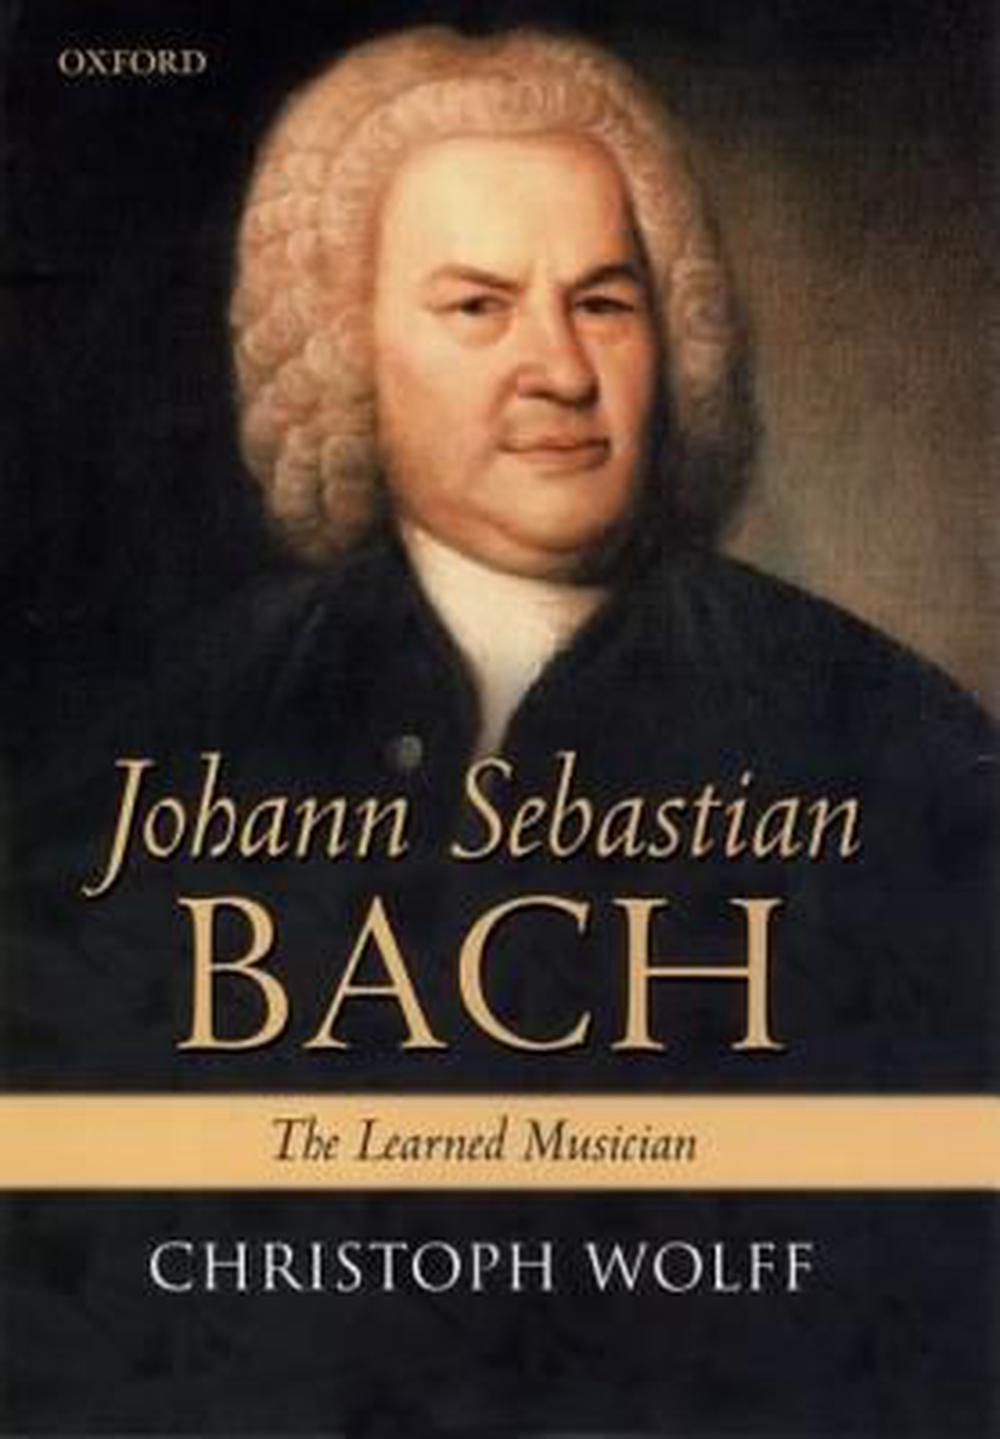 Johann Sebastian Bach by Christoph Wolff